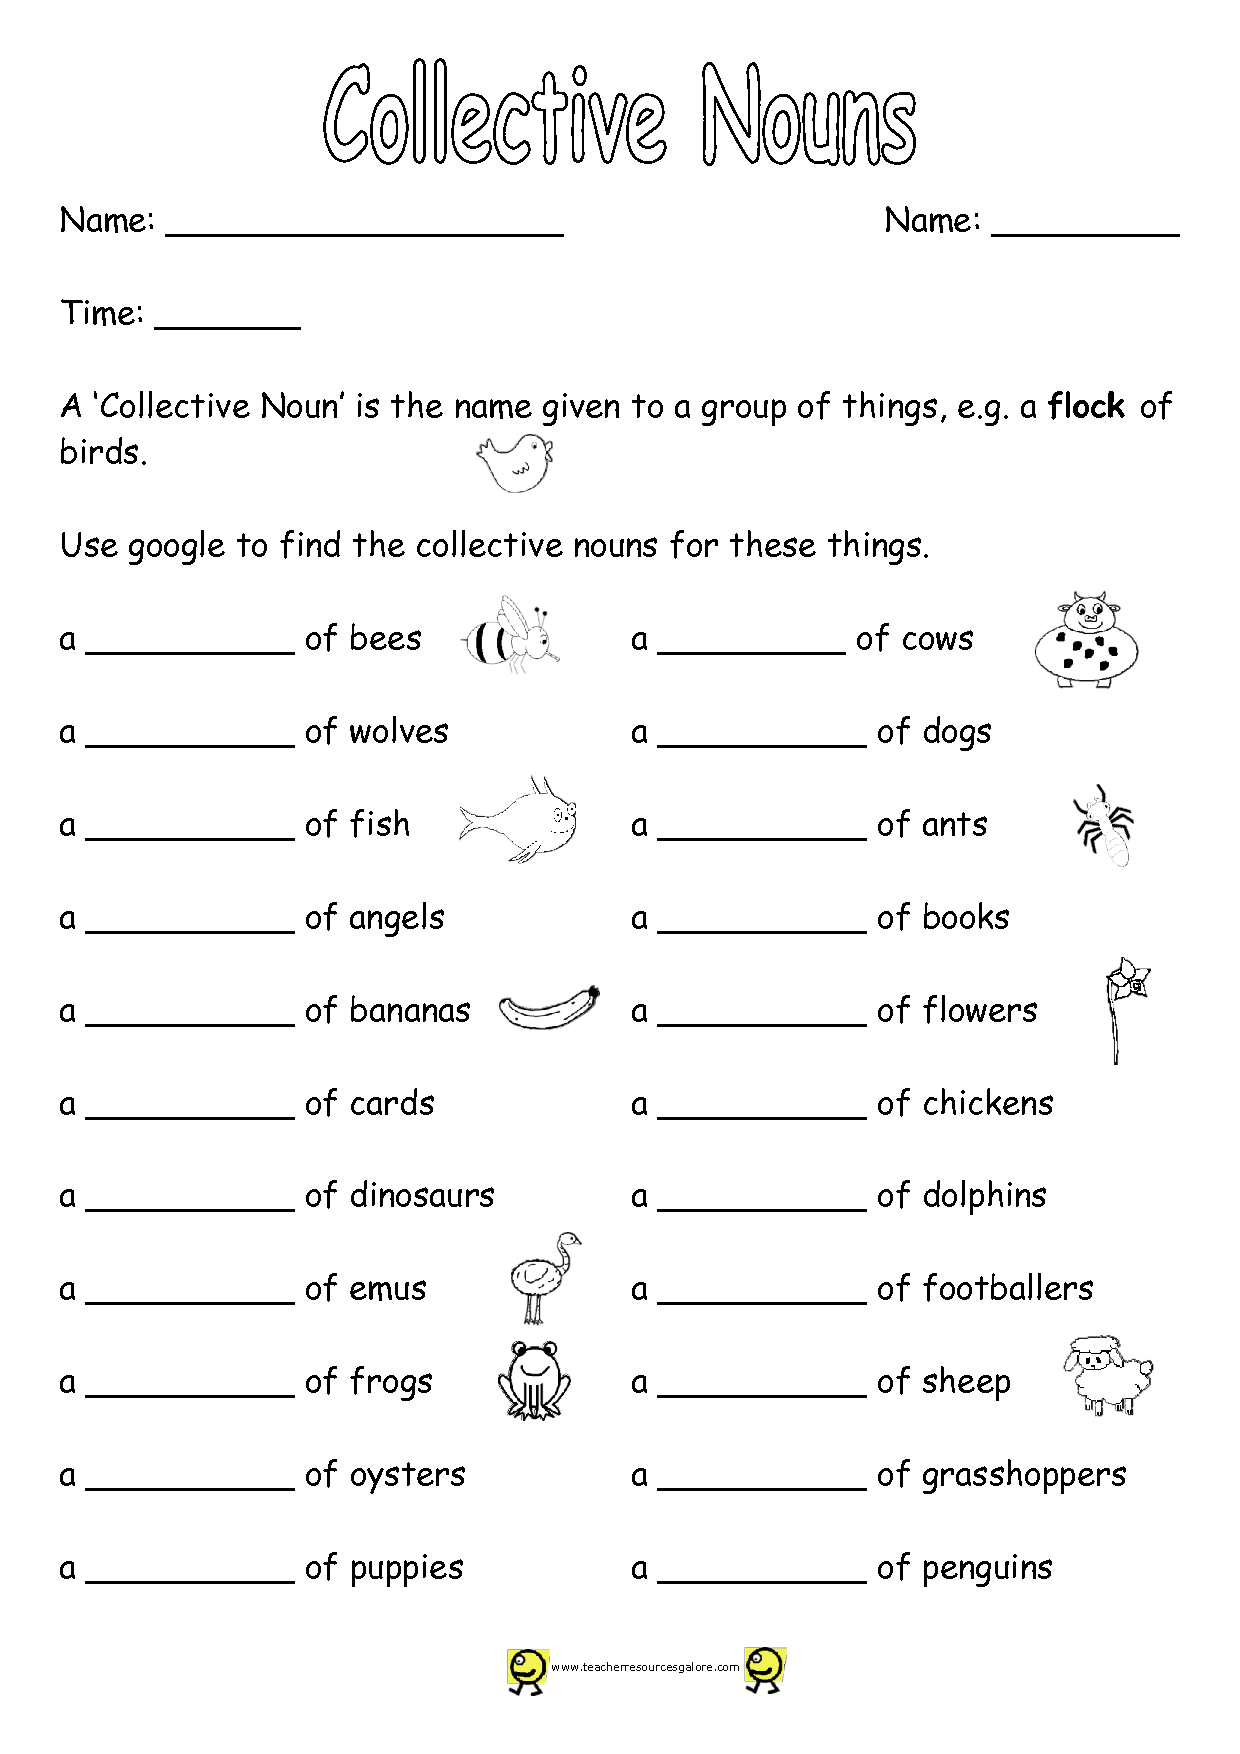 15-best-images-of-noun-coloring-worksheets-printable-noun-worksheets-grade-1-collective-nouns